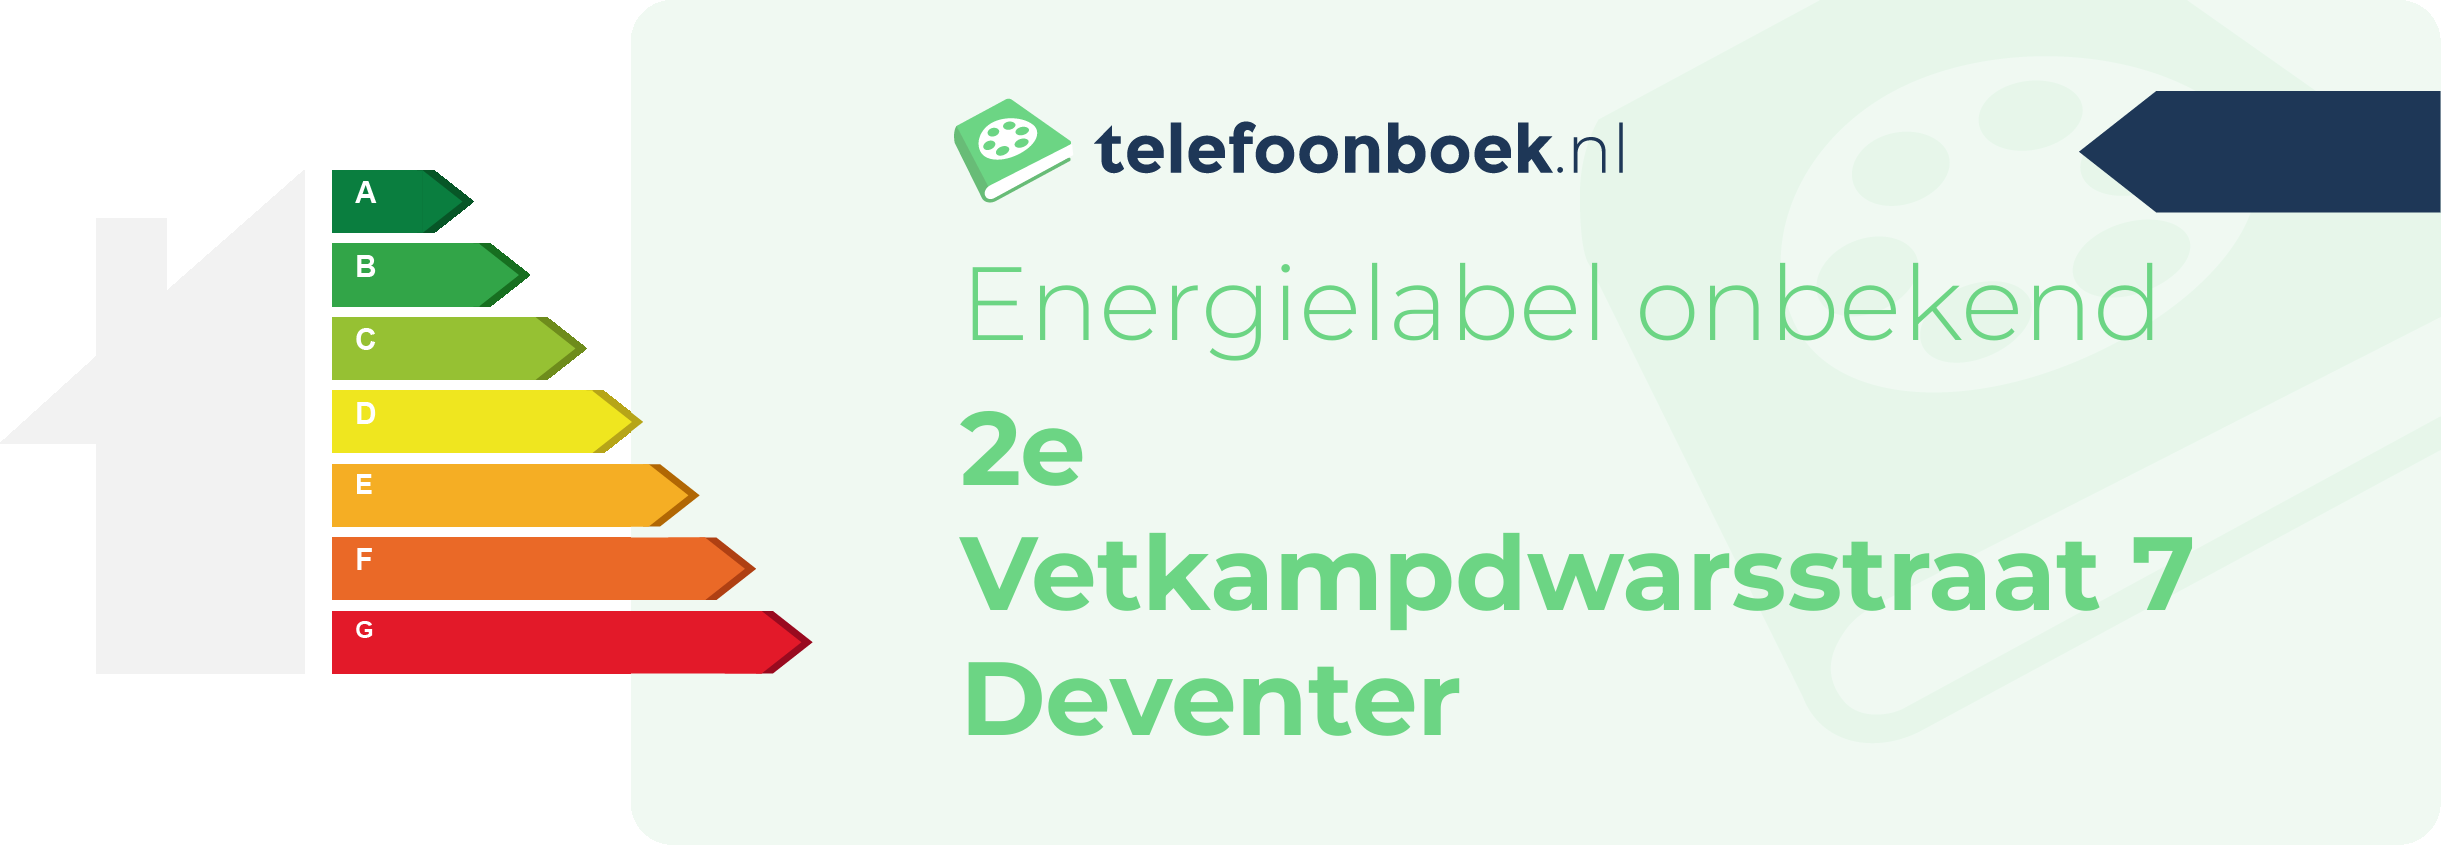 Energielabel 2e Vetkampdwarsstraat 7 Deventer